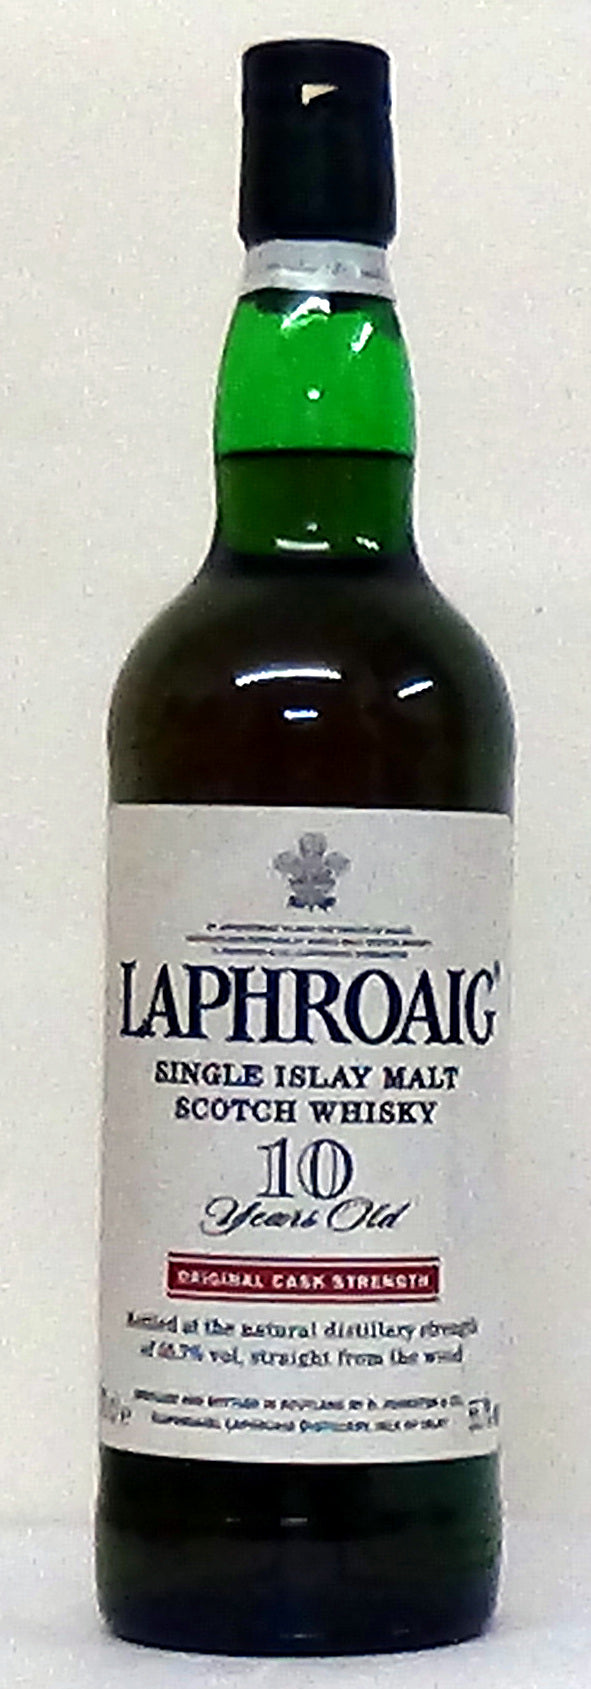 Laphroaig 10 Year Old Original Cask Strength 55.7% Abv - Whiskey - M&M